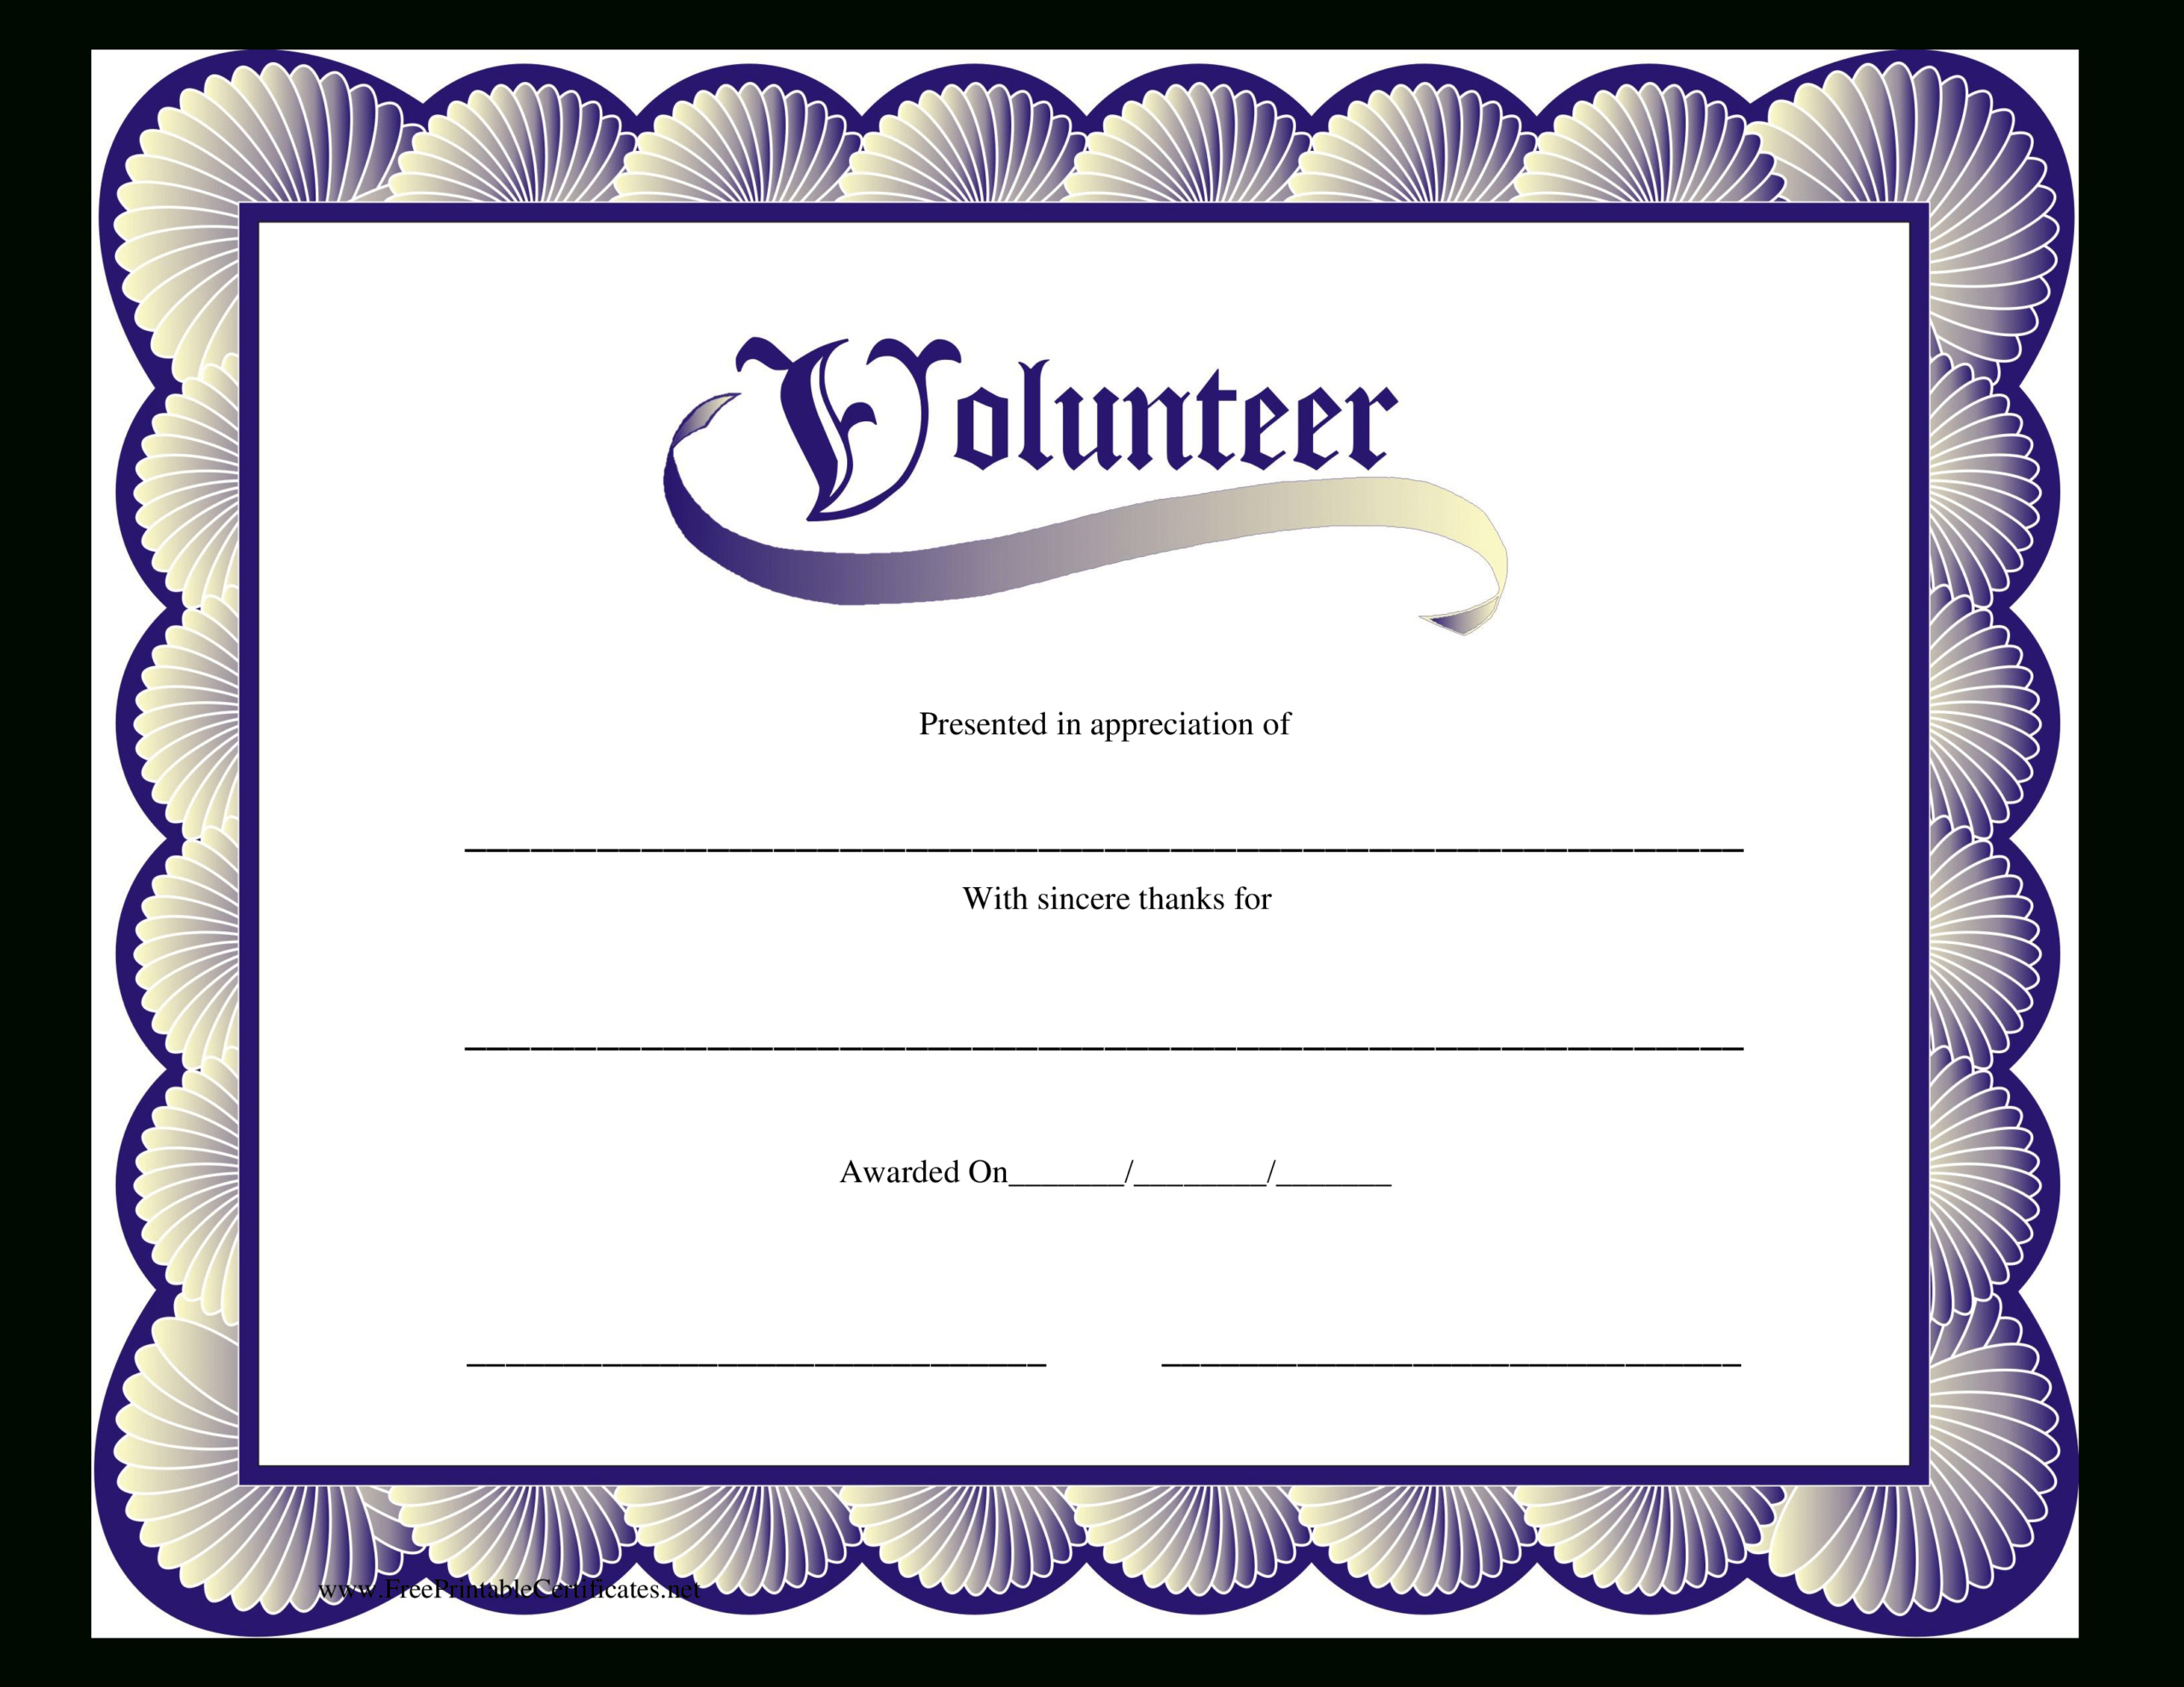 Volunteer Certificate | Templates At Allbusinesstemplates Pertaining To Volunteer Certificate Templates